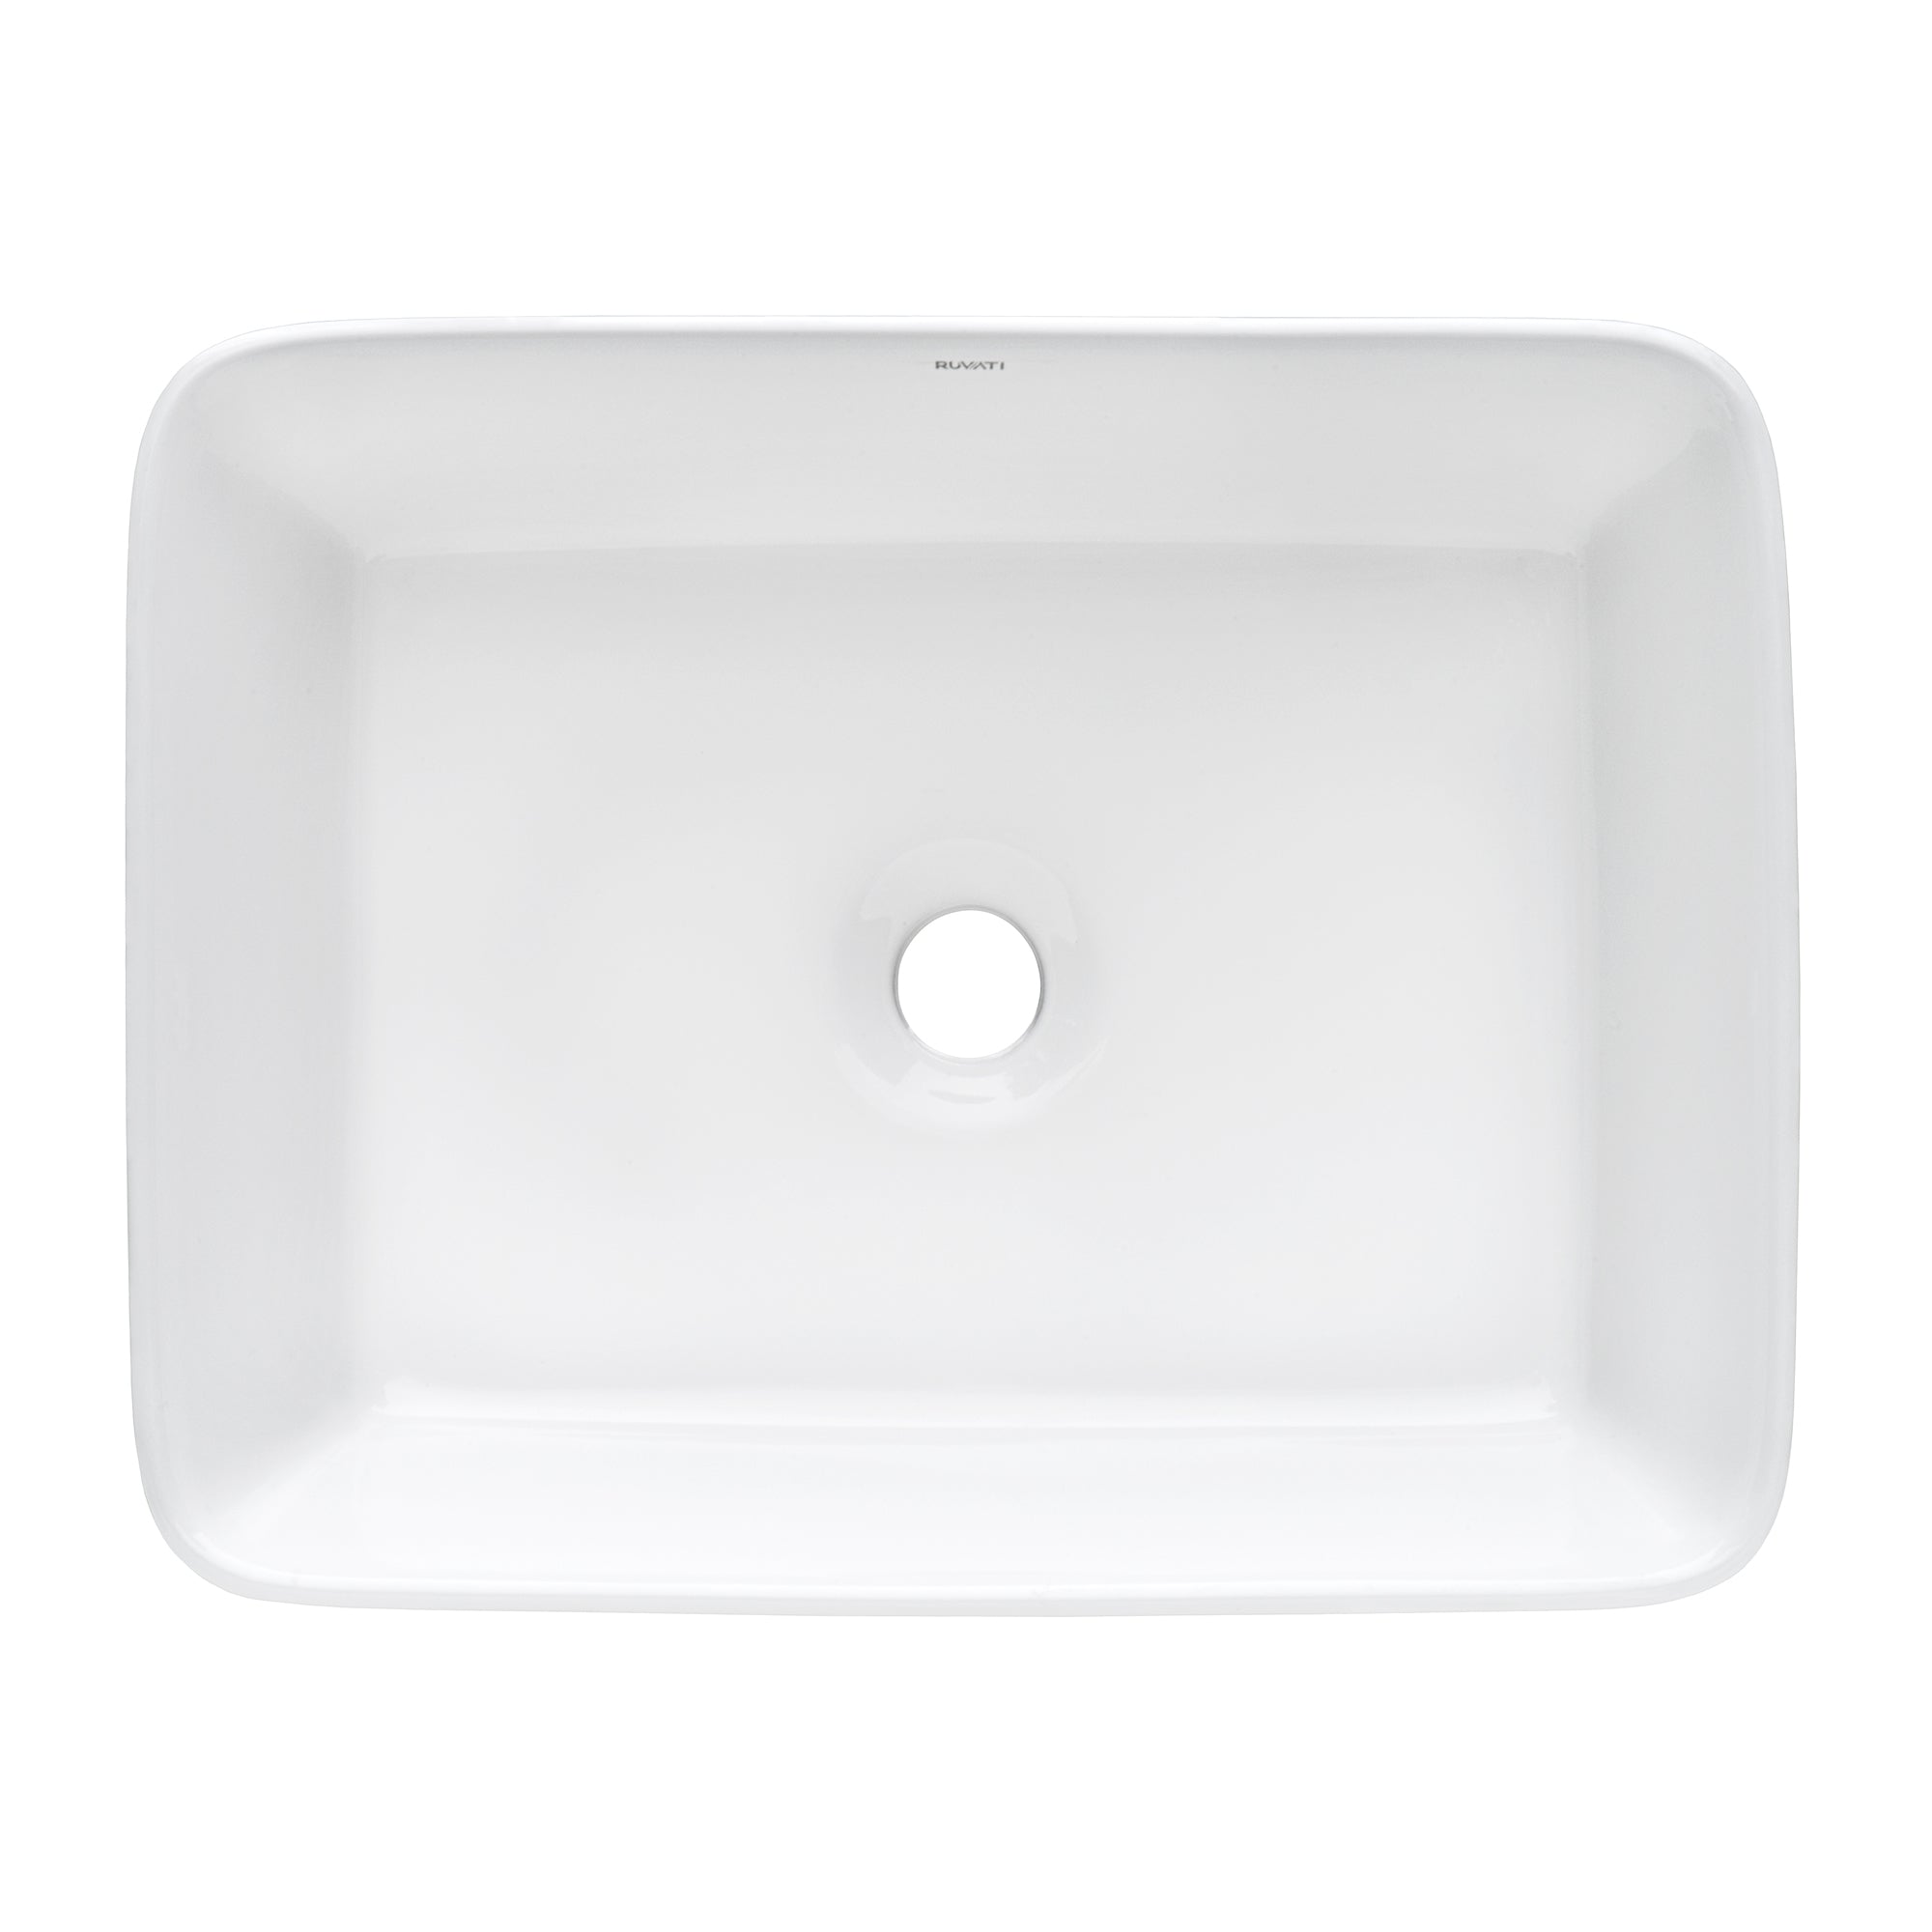 19 x 14 inch Bathroom Vessel Sink White Rectangular Above Vanity Counter Porcelain Ceramic